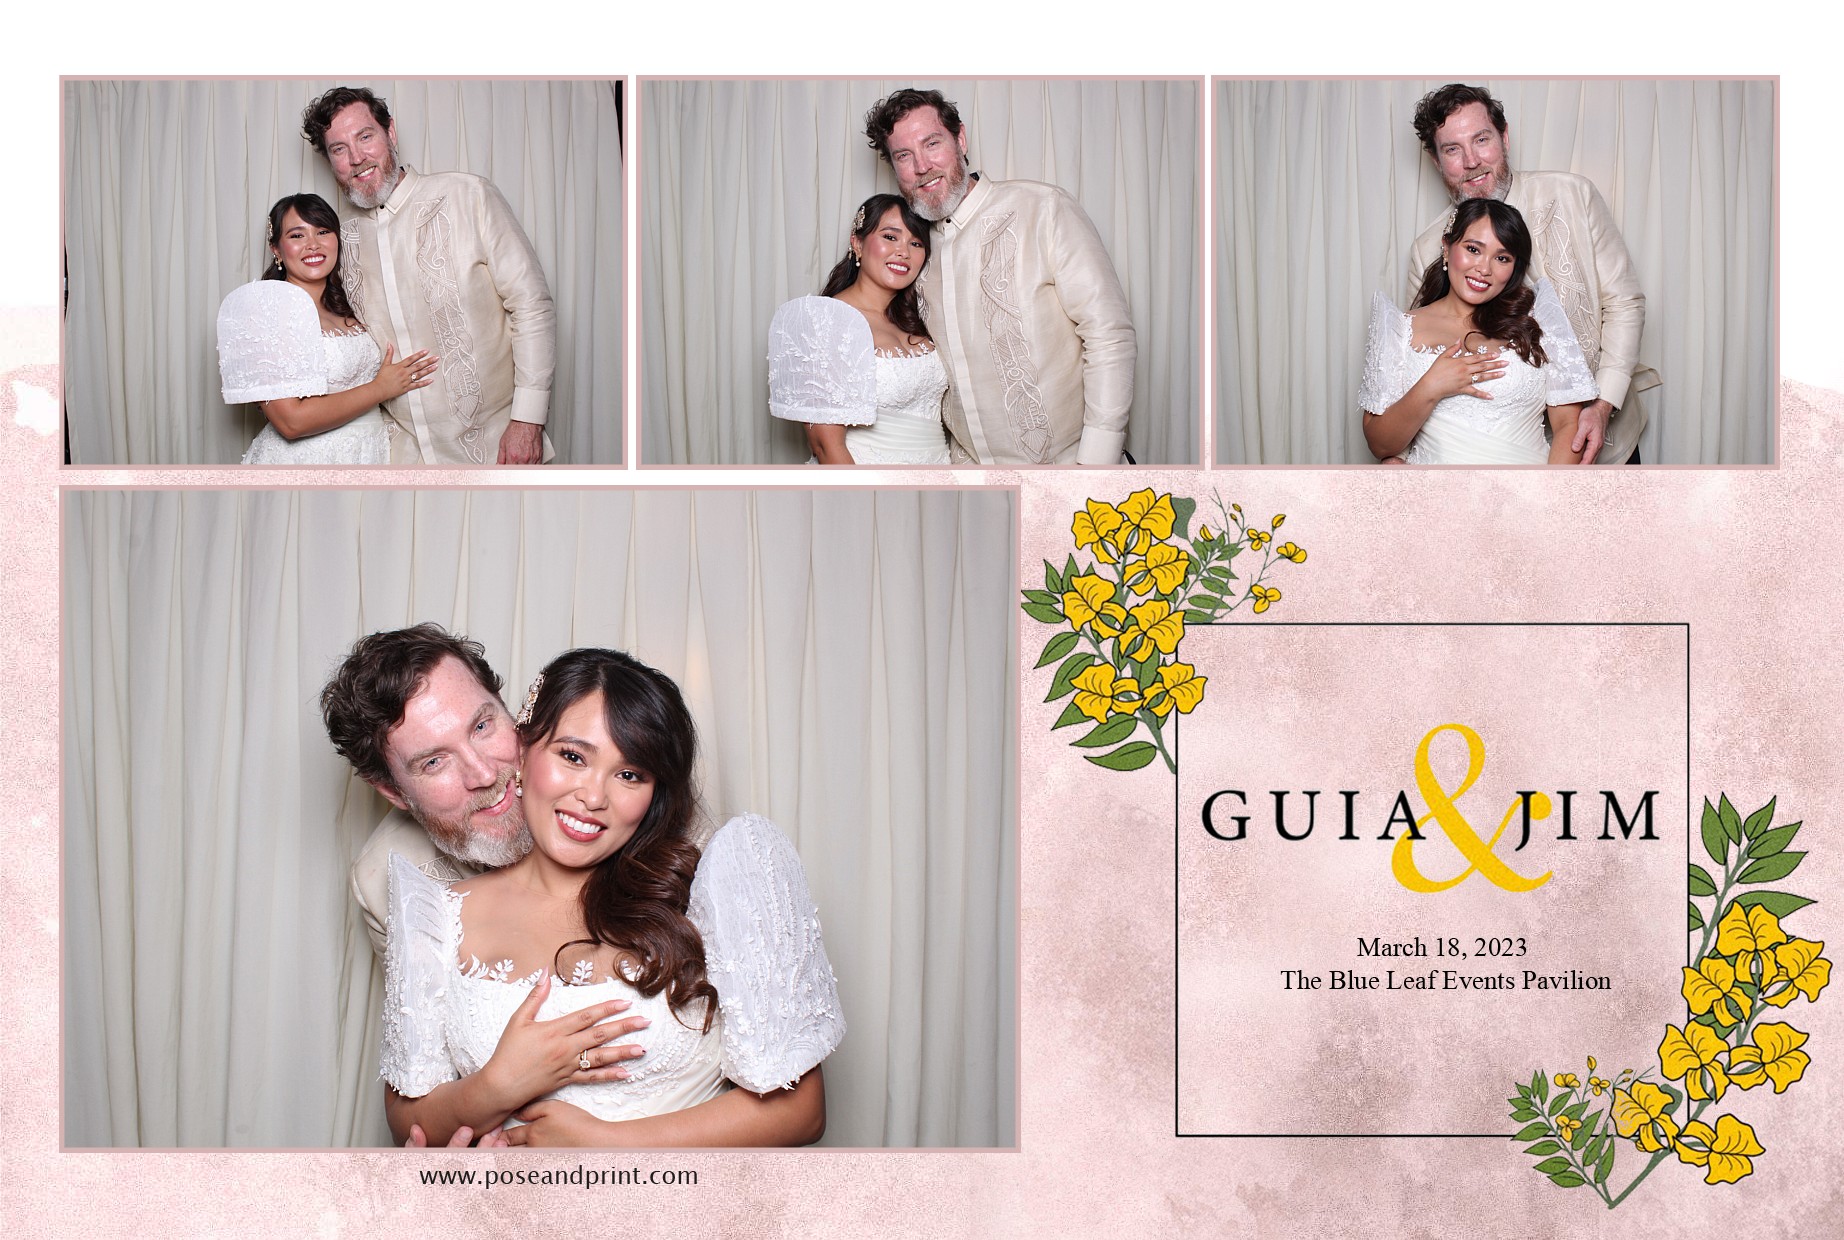 Guia and Jim's Wedding